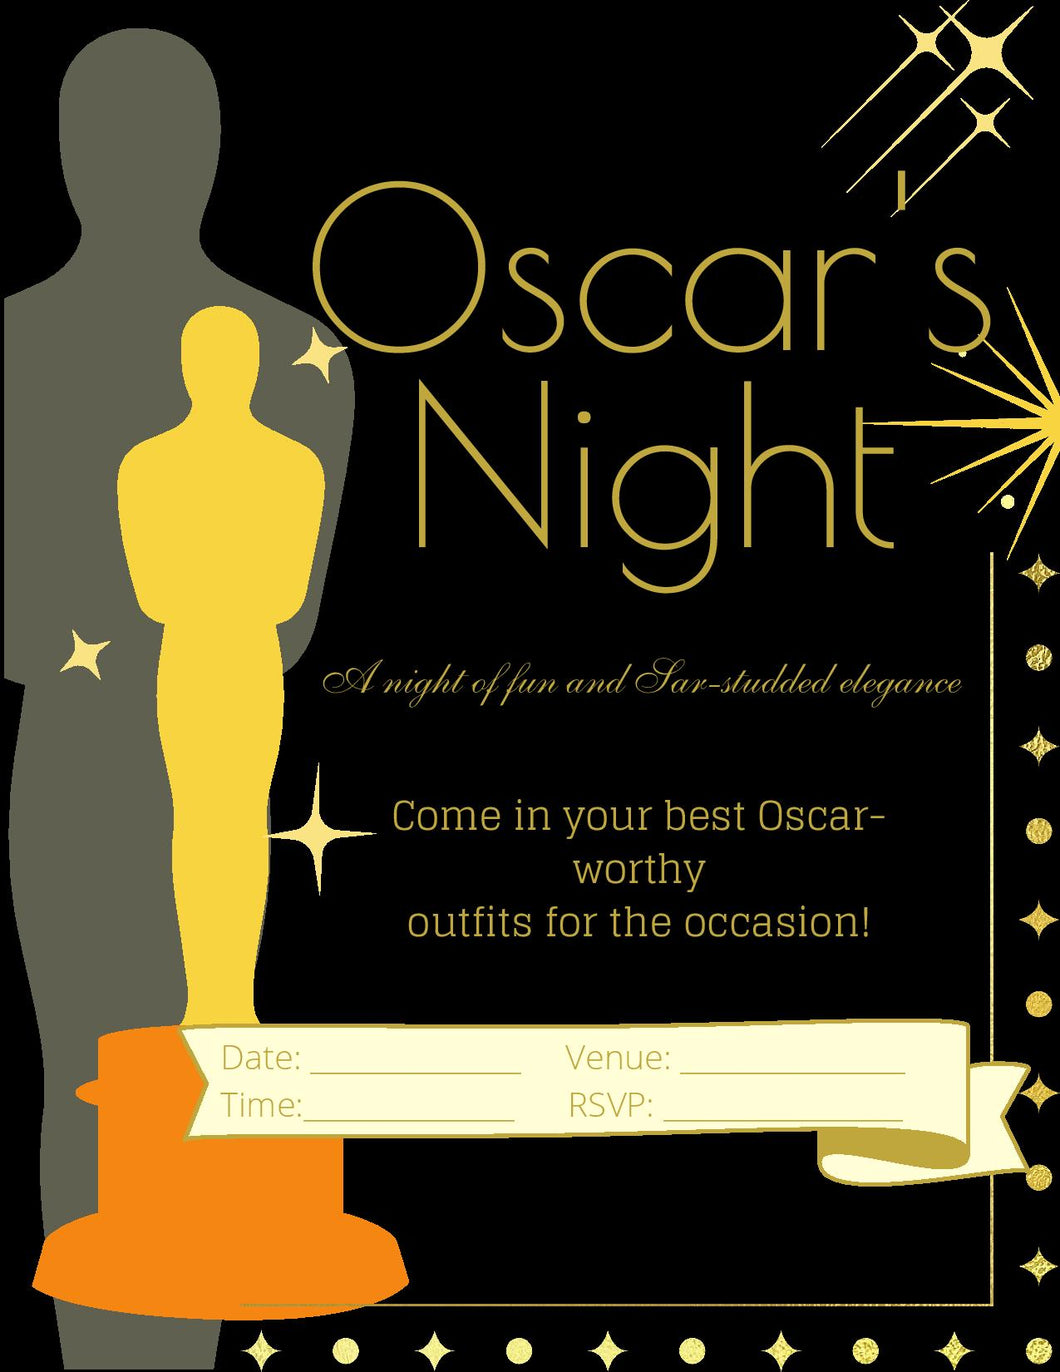 Oscars Night